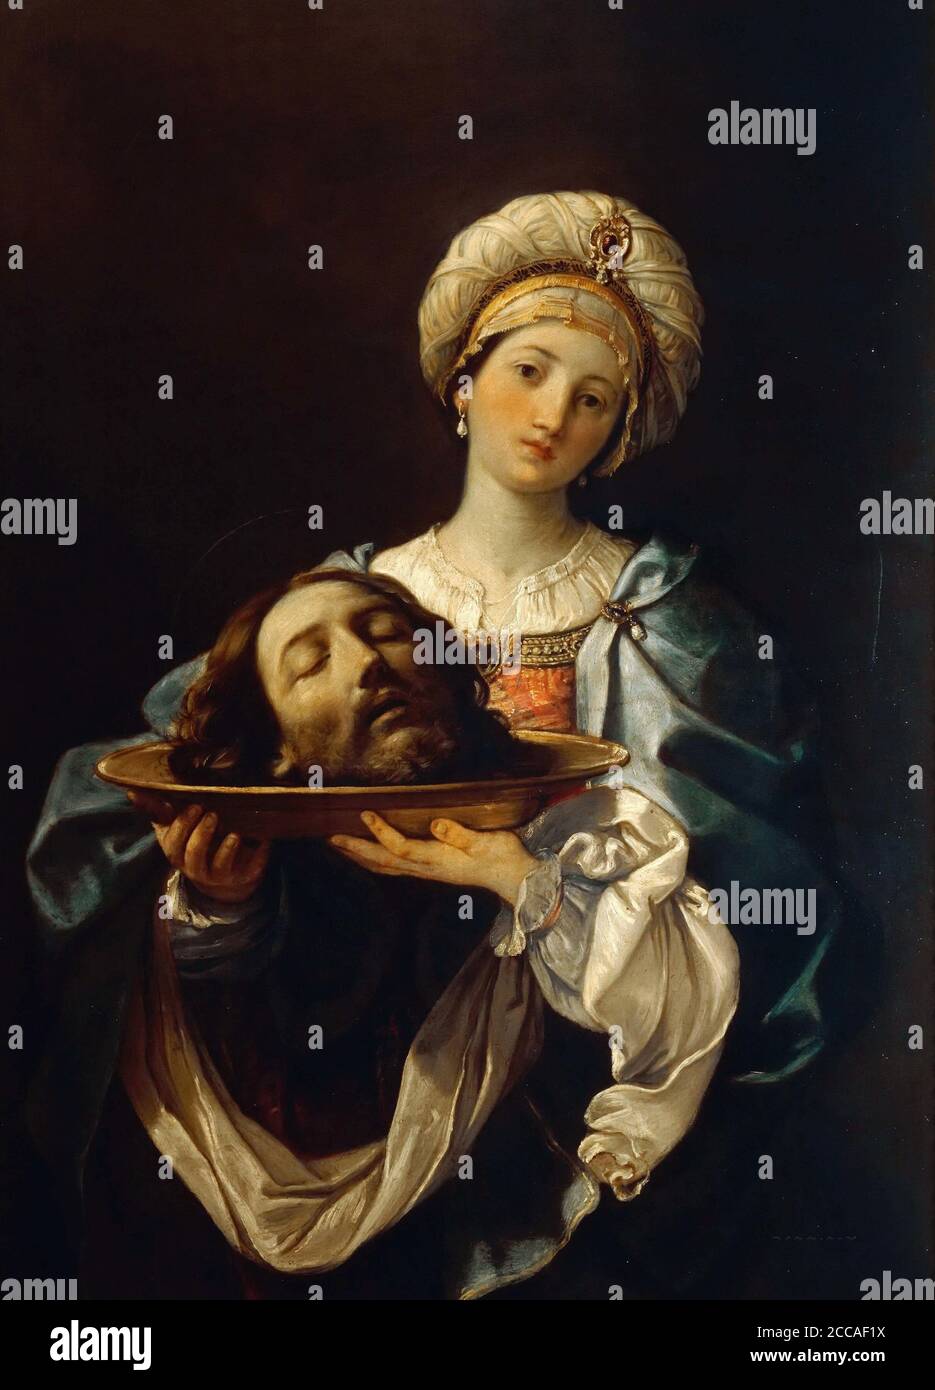 Salome holding the head of John the Baptist. Museum: Galleria Nazionale d'Arte Antica, Rome. Author: GUIDO RENI. Stock Photo